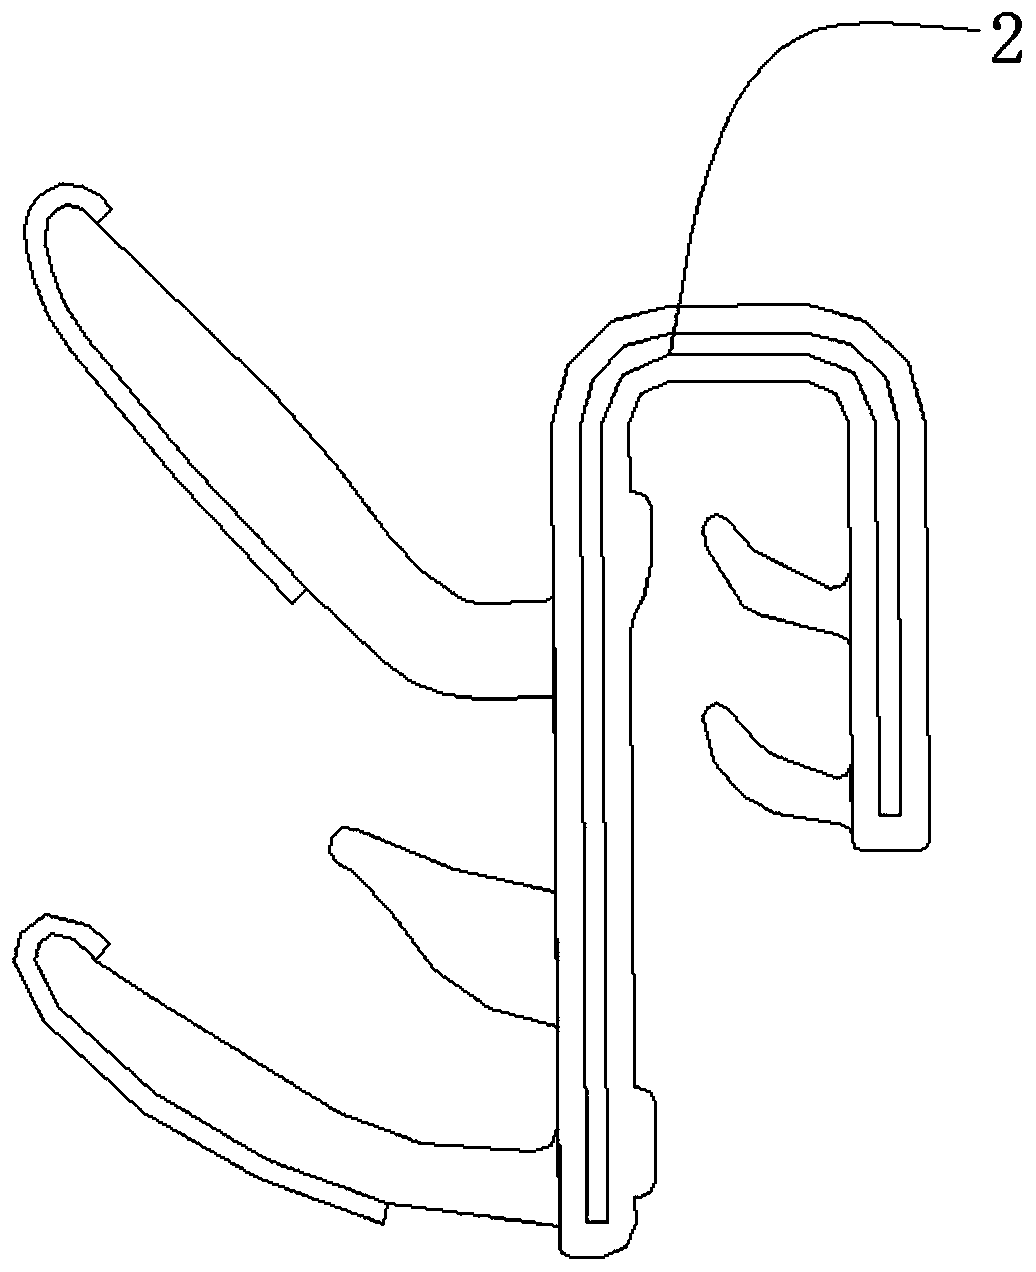 Novel inner water wiper metal buckle structure